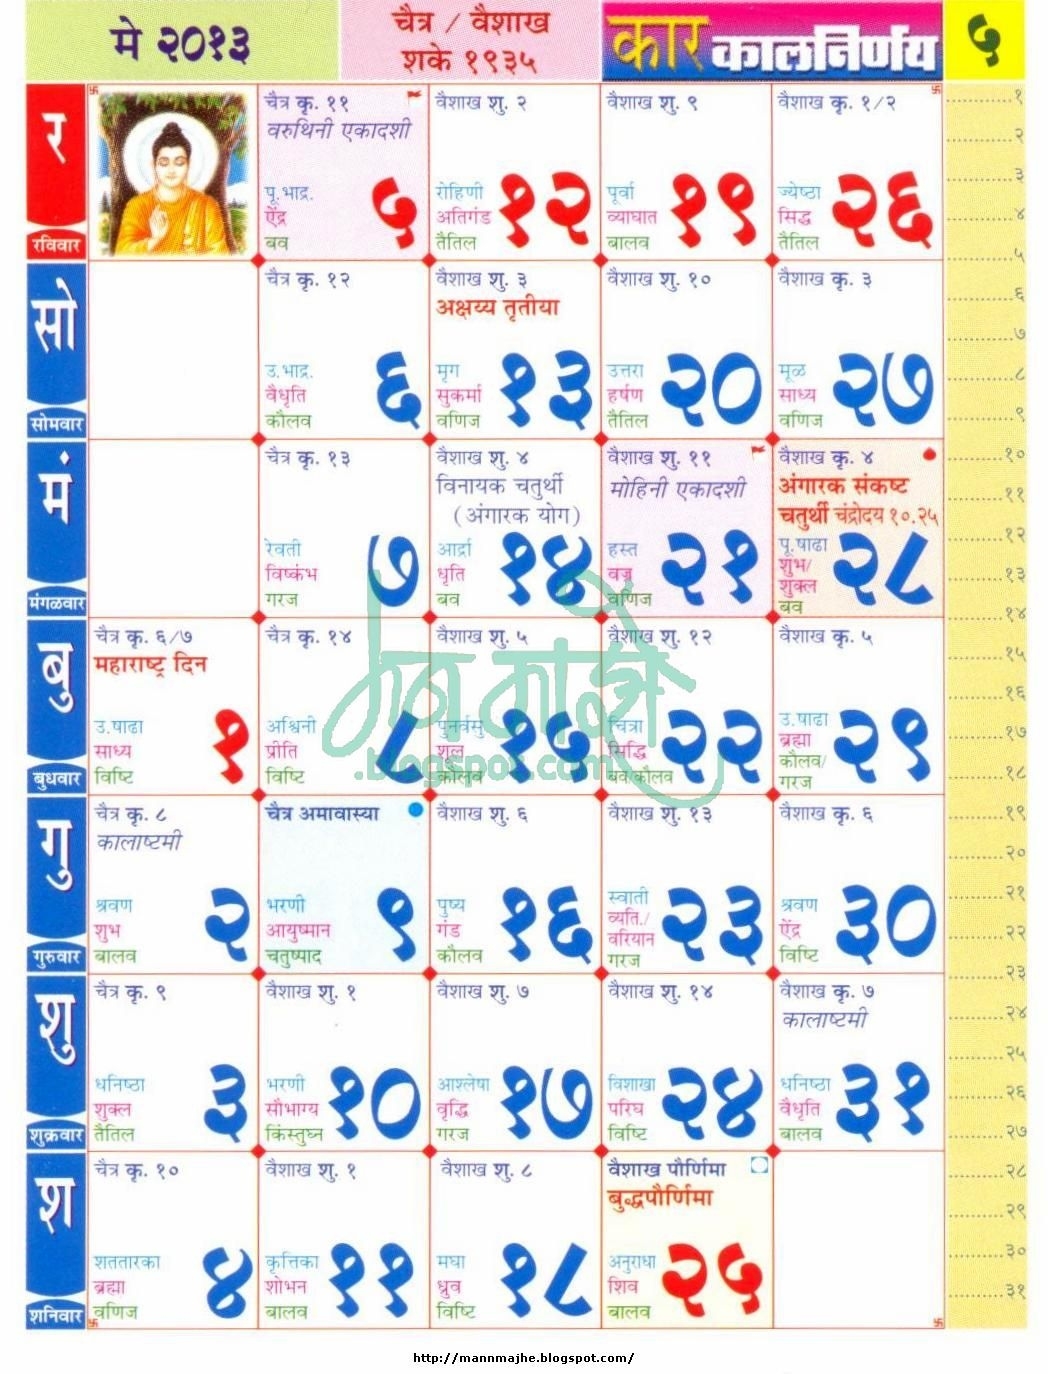 February Kalnirnay 2021 Marathi Calendar Pdf - February 2018 Kalnirnay Calendar In Marathi And Kalnirnay June 2021 Marathi Calendar Pdf